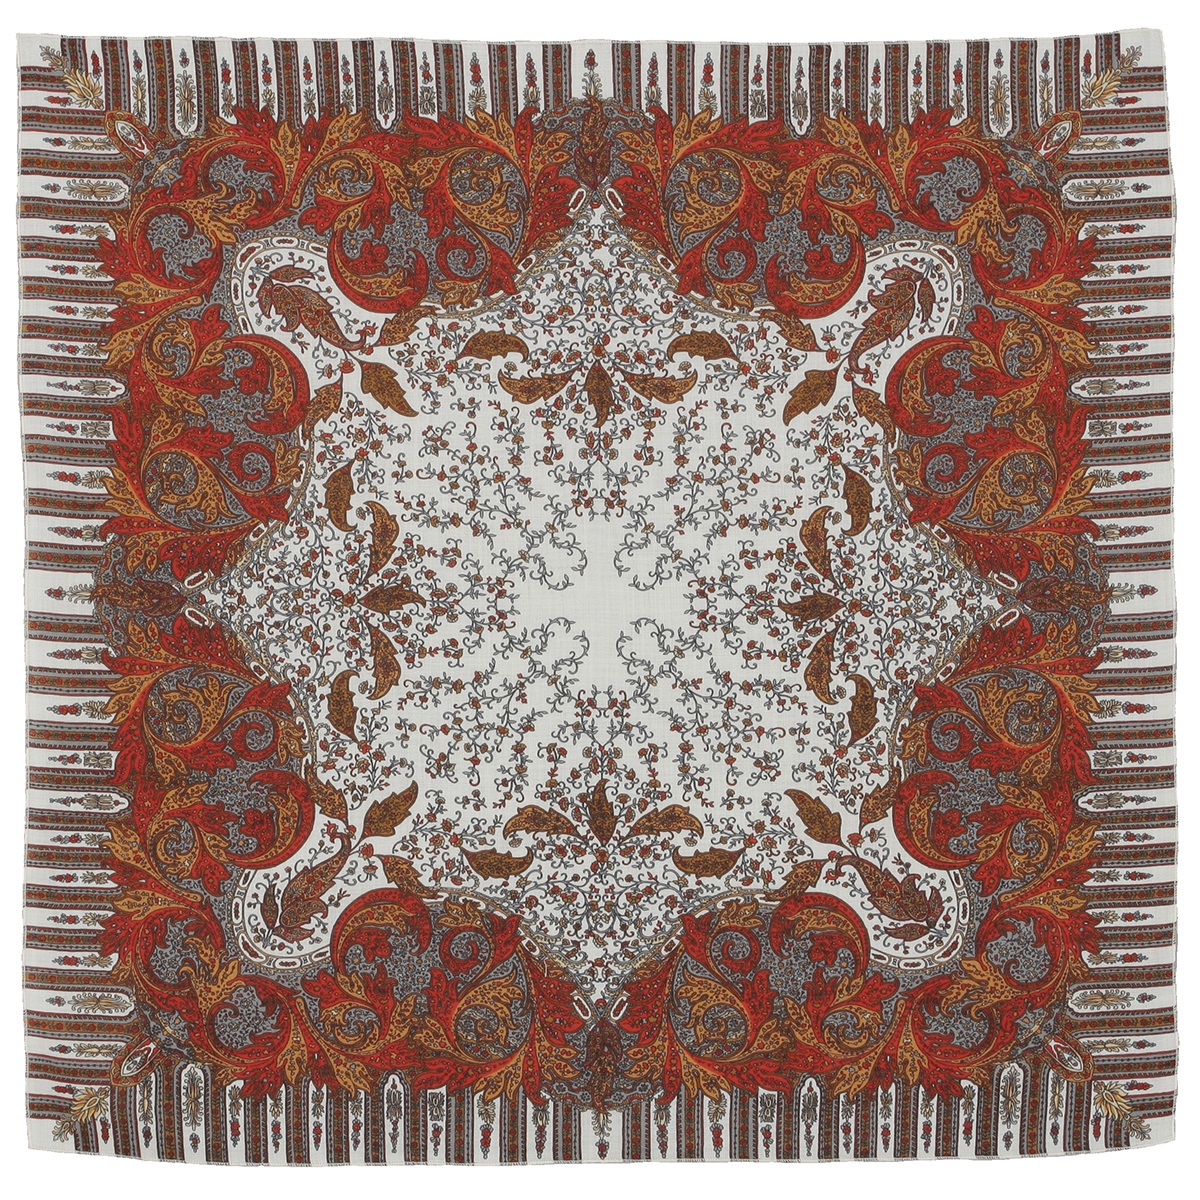 586-0 Original Pavlovo Posad Russian Shawl 100% Wool scarf 89×89 cm